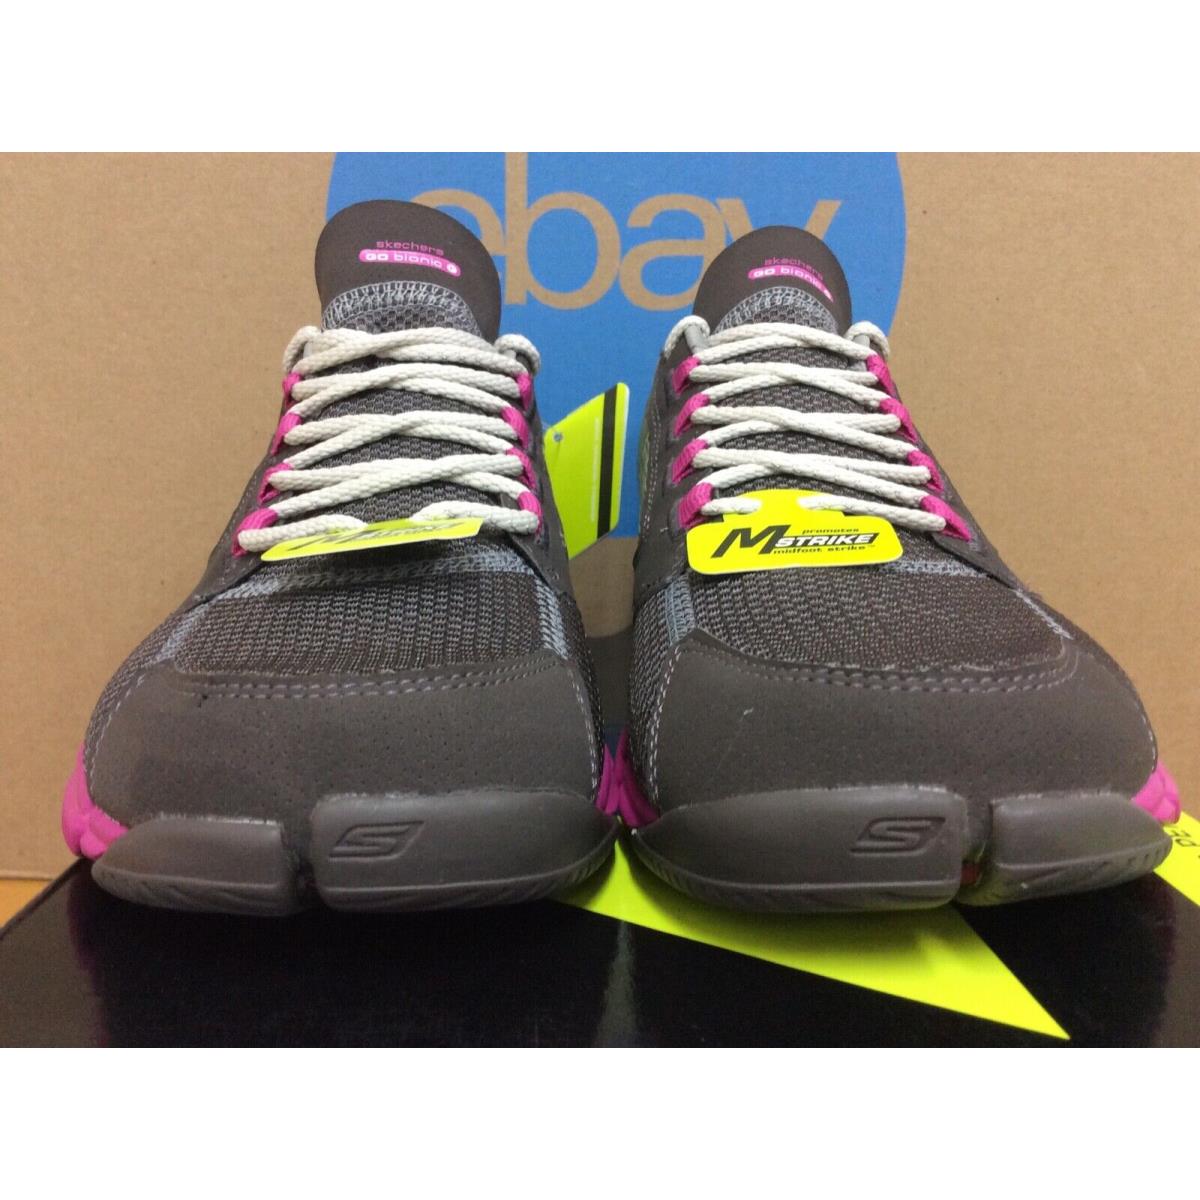 Skechers shoes Bionic Ride - Charcoal Hot Pink 1